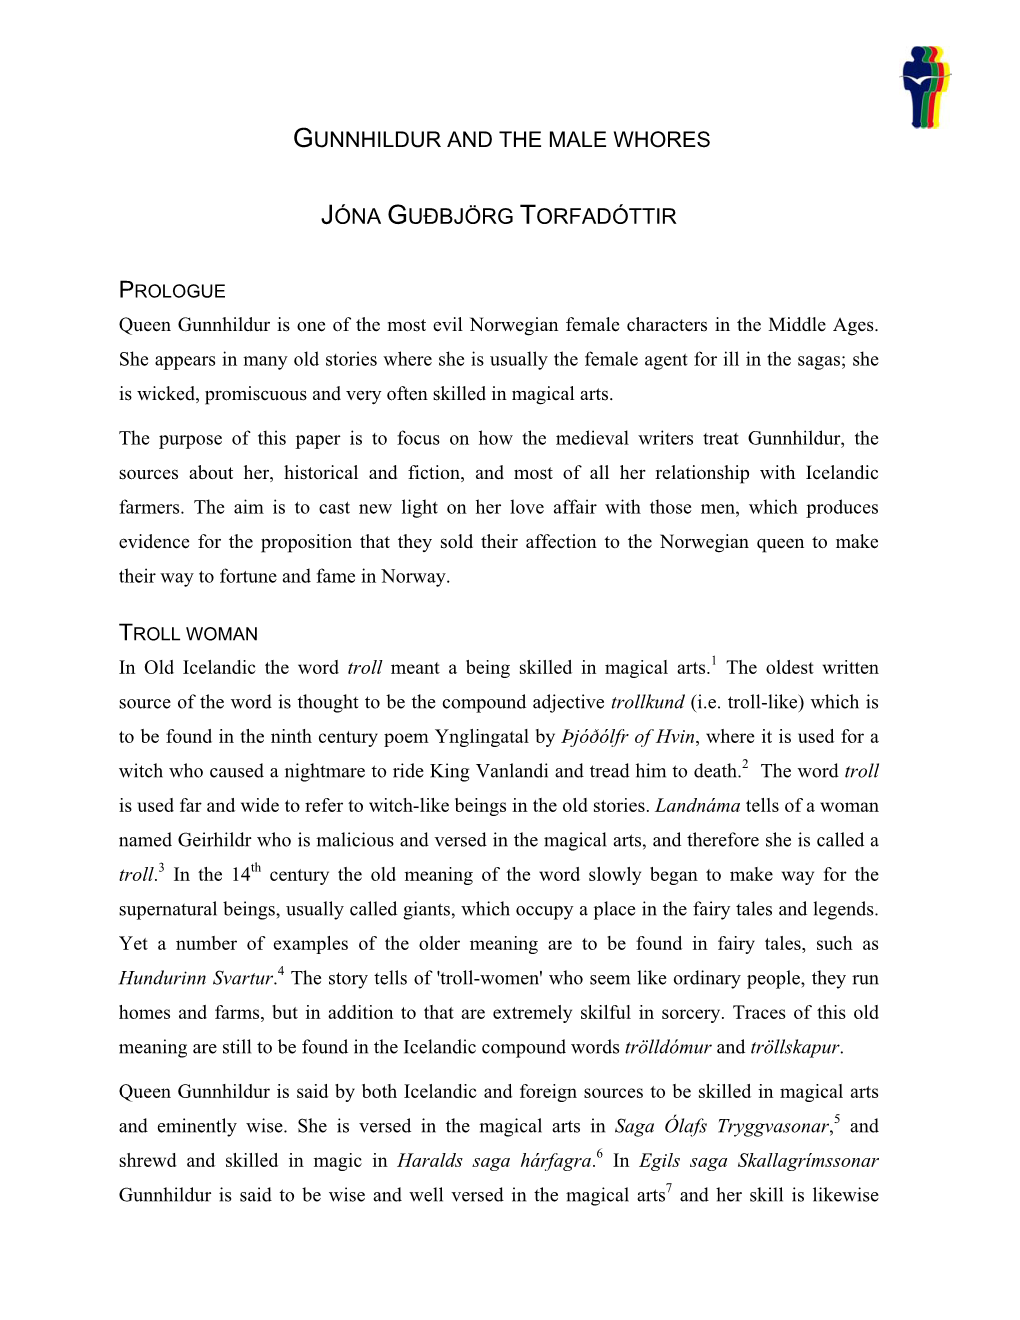 Re-Reading William Morris Re-Writing the Vølsunga Saga